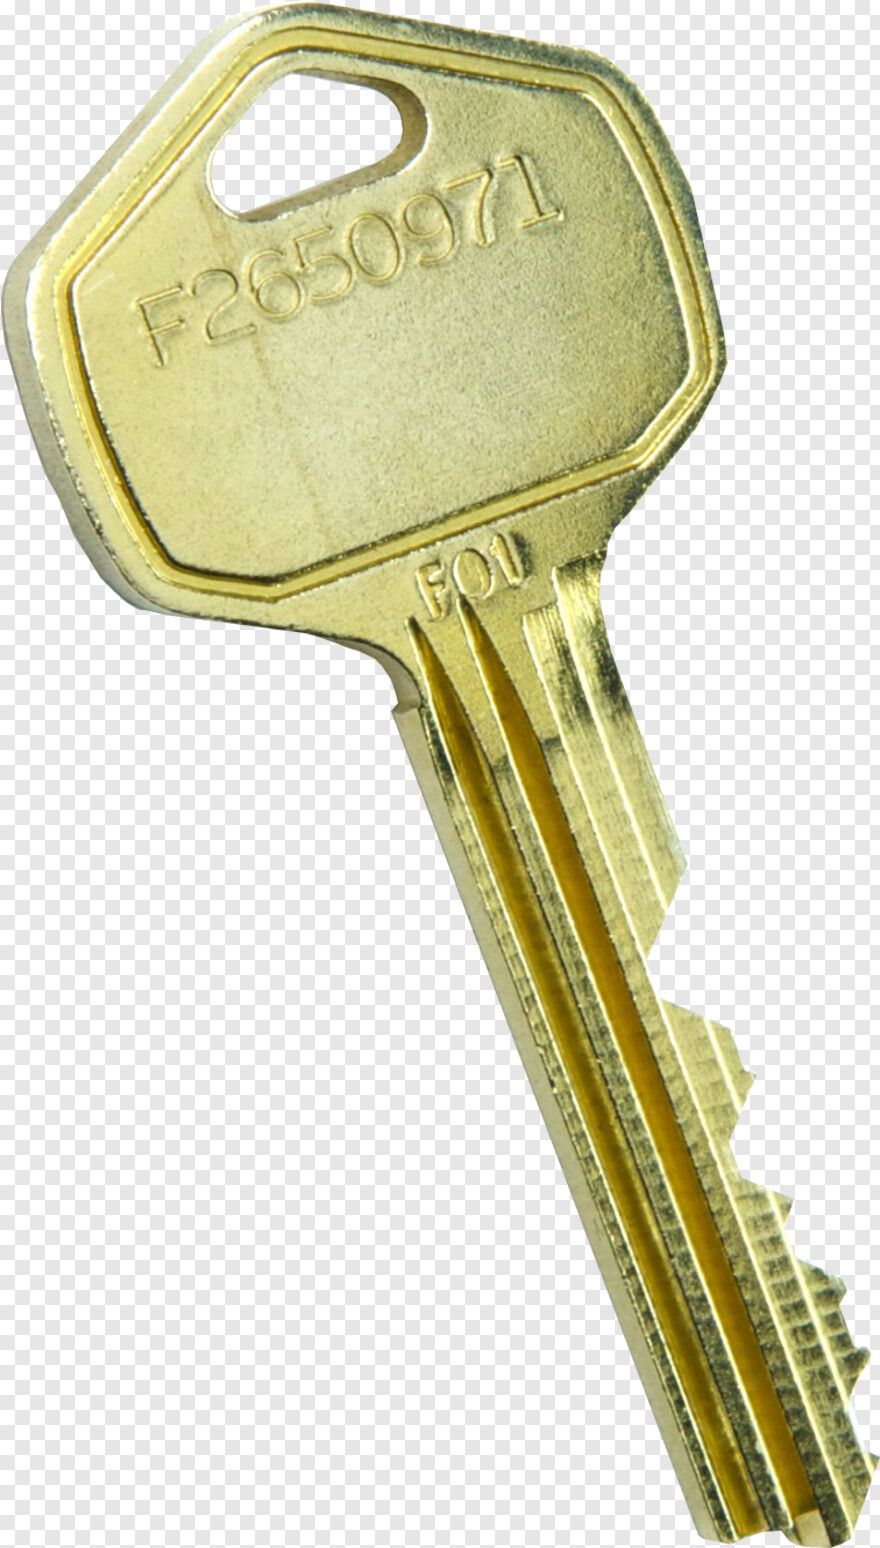  Vintage Key, Key, Key Icon, Skeleton Key, Key Hole, House Key